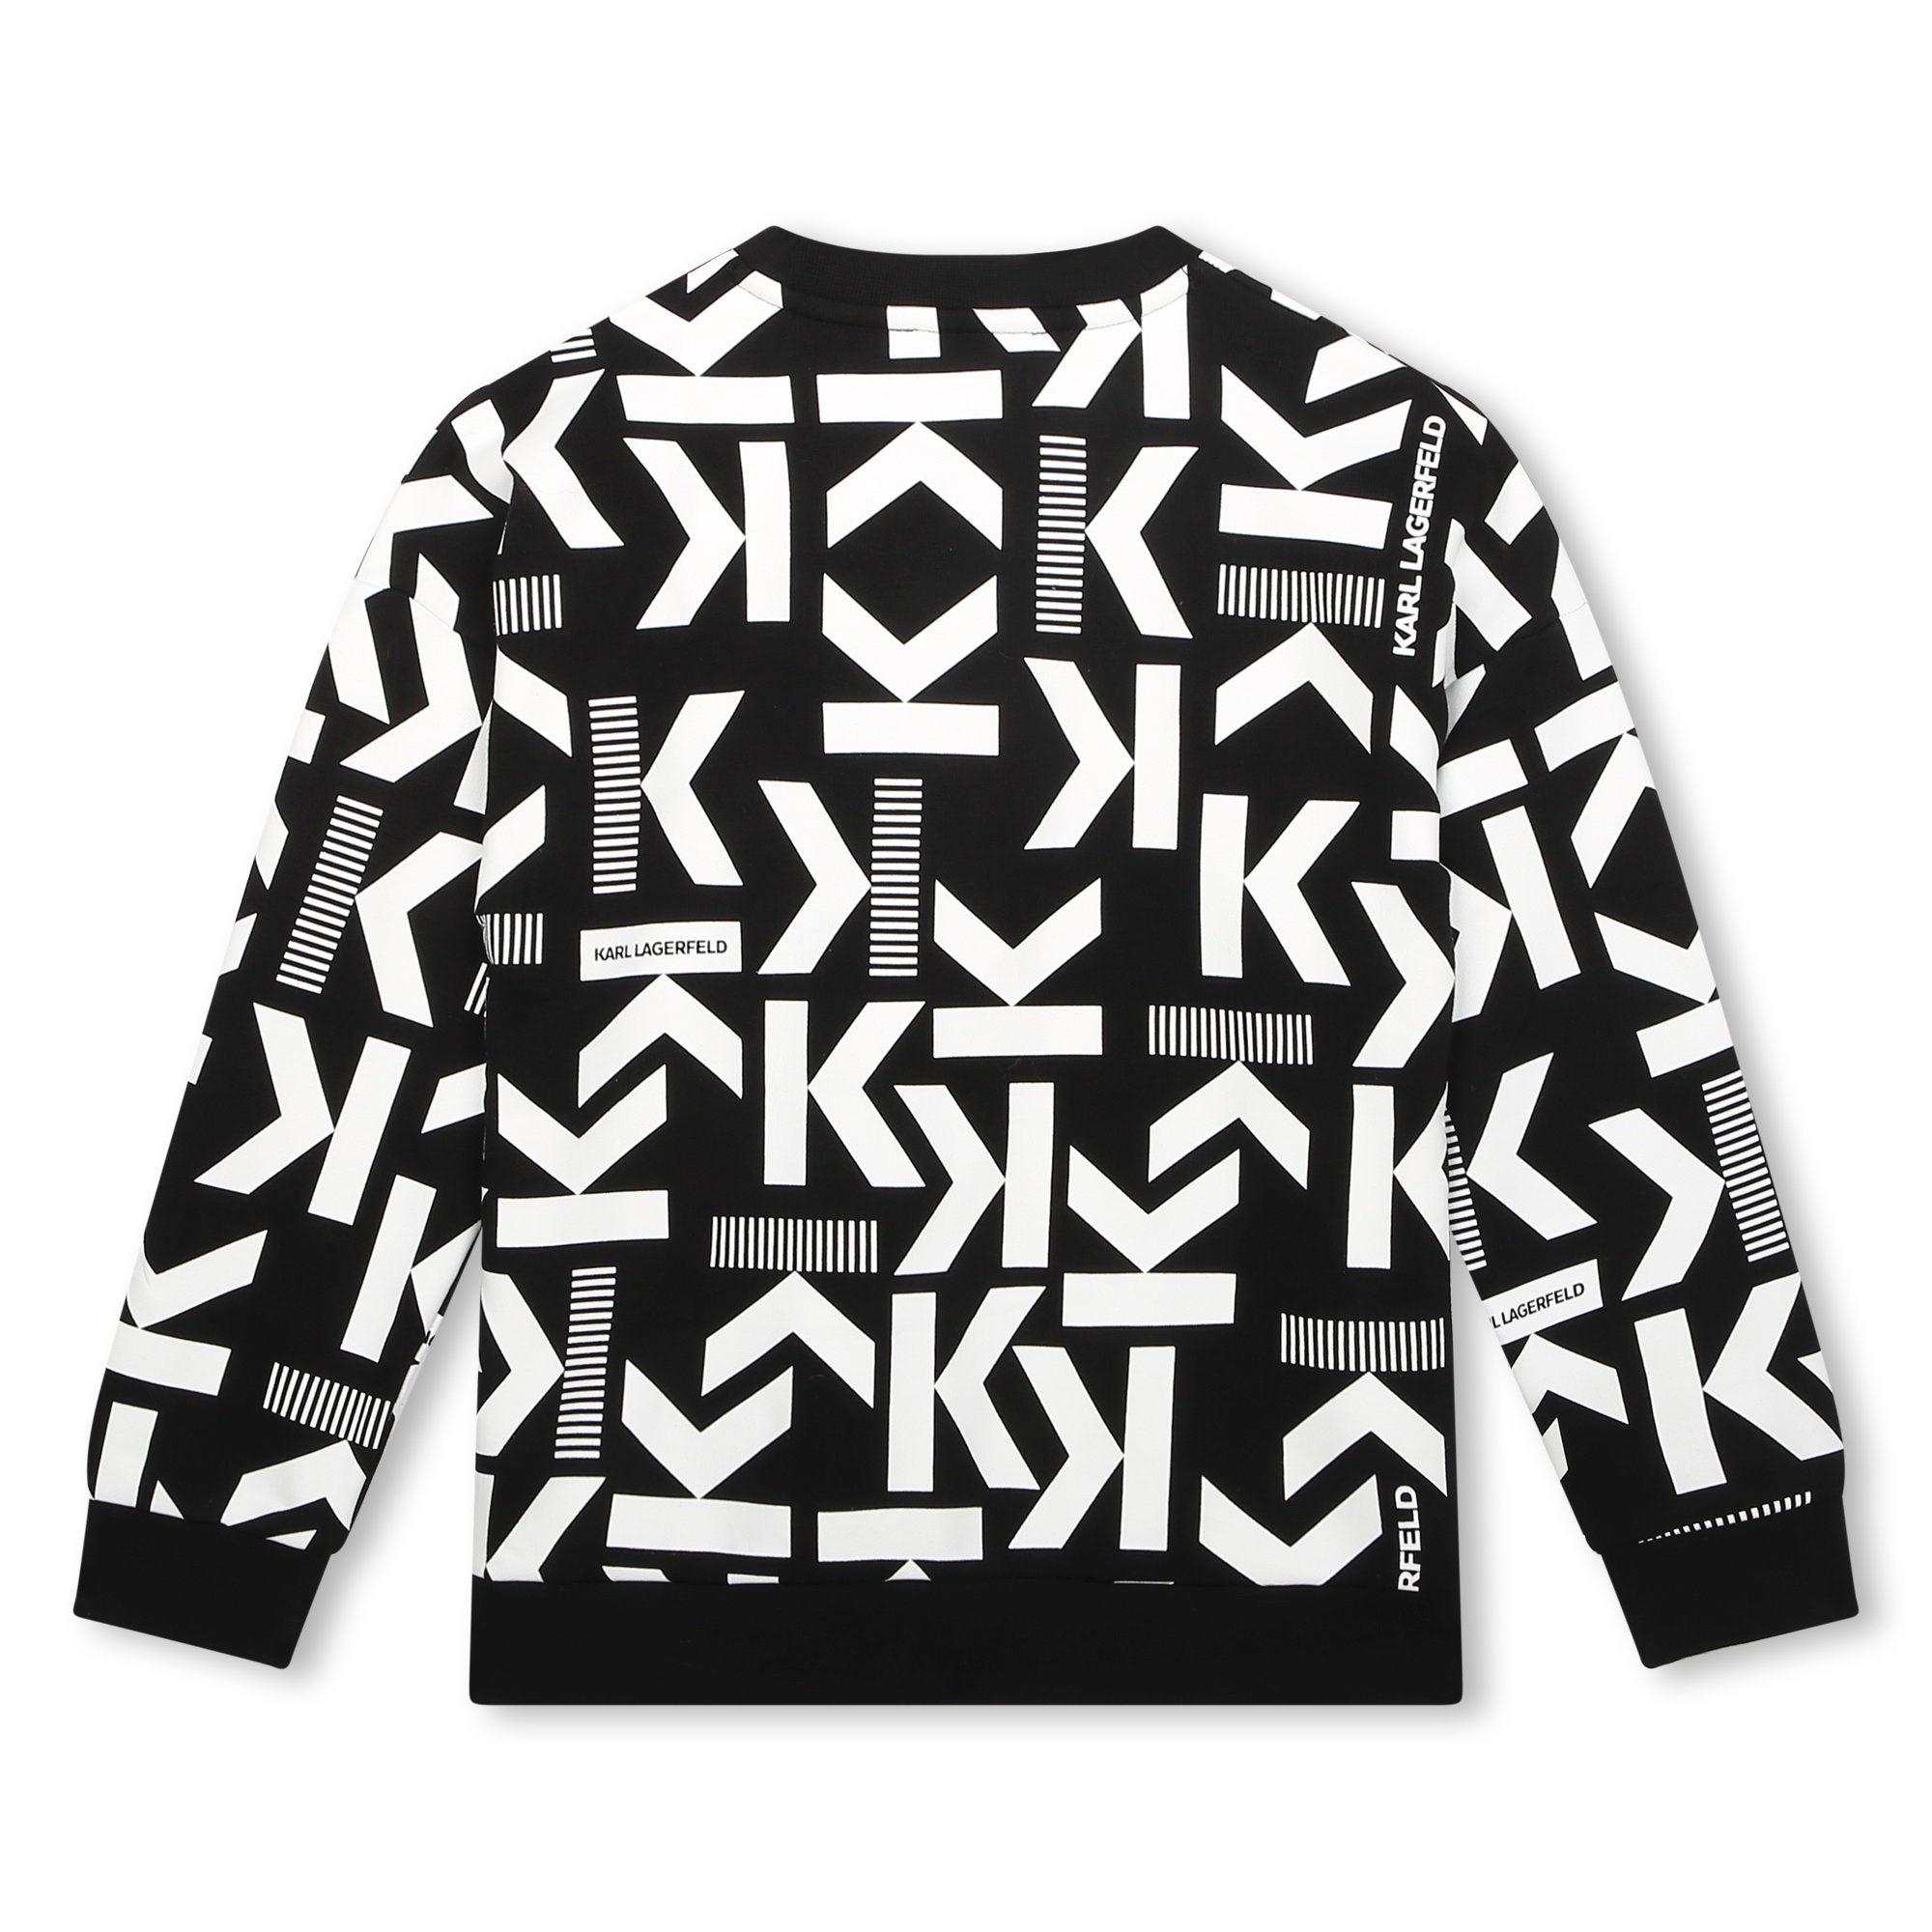 Fleece sweater KARL LAGERFELD KIDS Voor